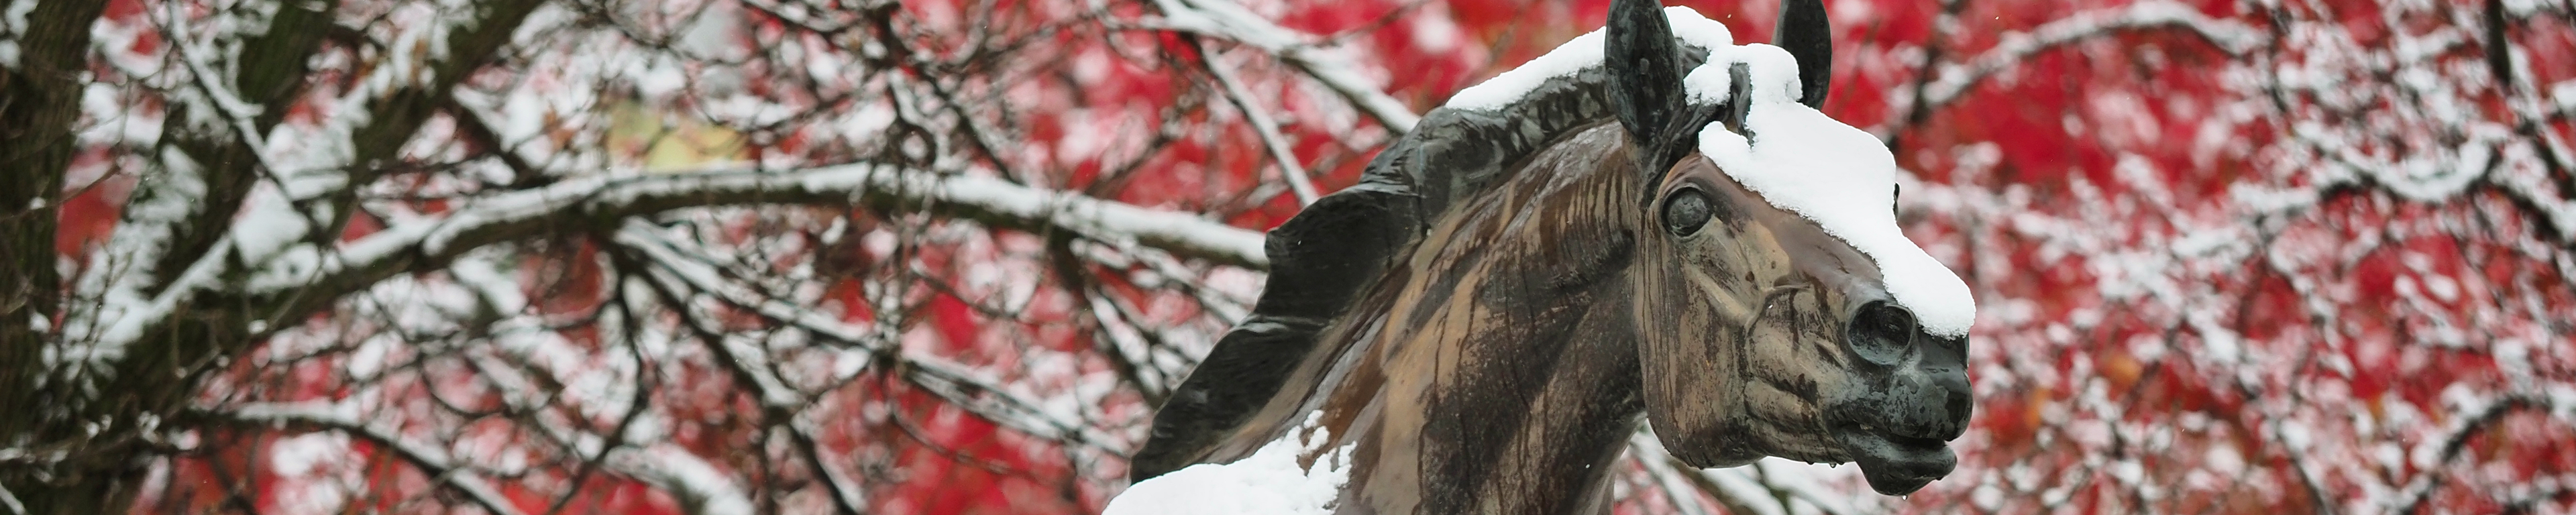 Page banner: snowy Bronco statue on WMU campus